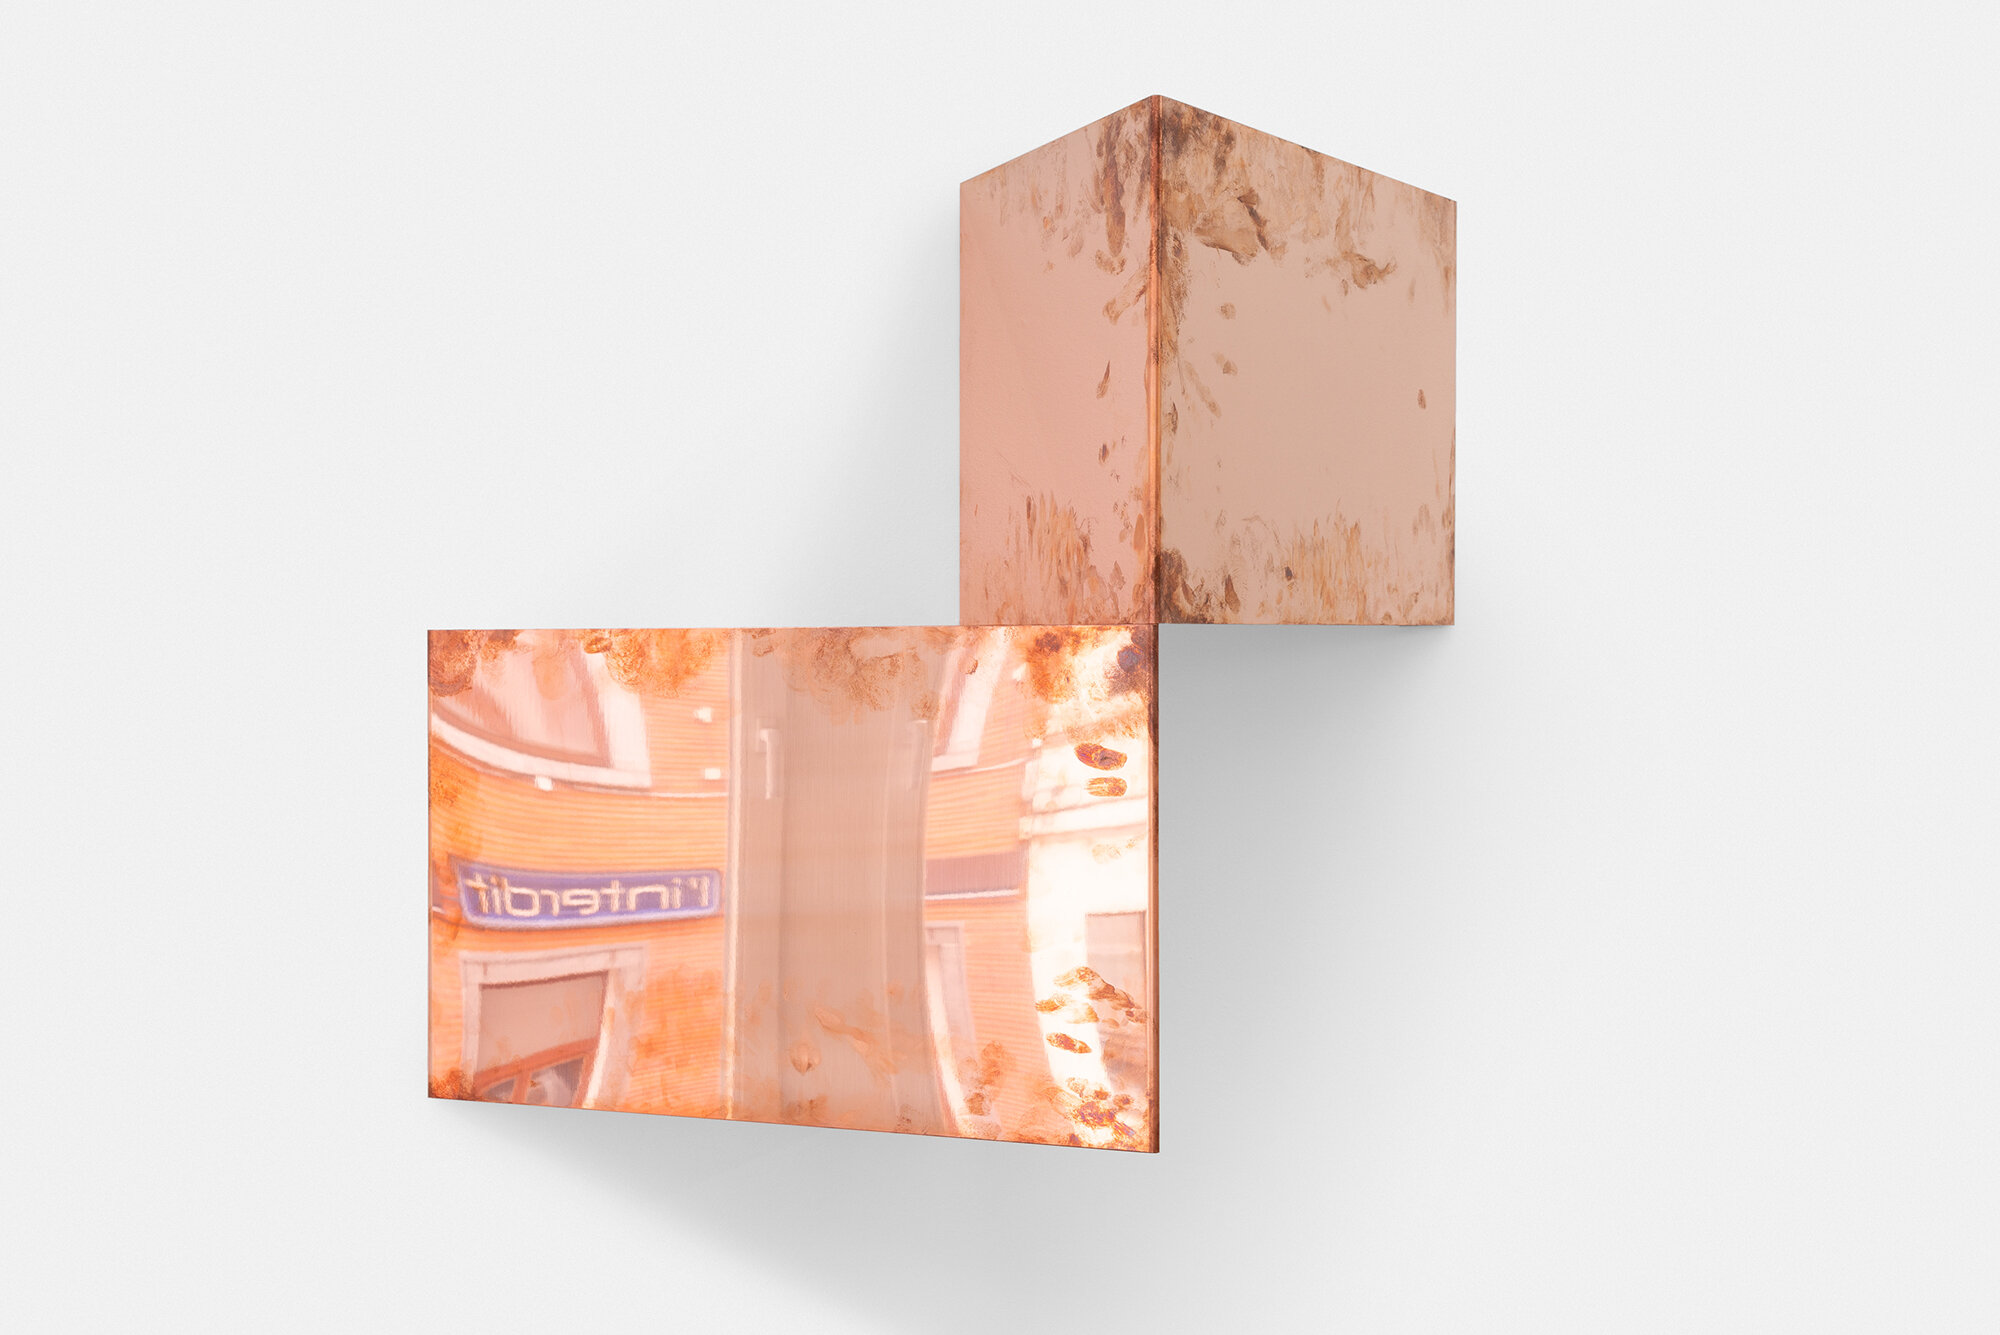   Copper Surrogates (48” x 120” 48 ounce C11000 Copper Alloy, 45º/45º/90º, 8 Sections: February 23–27/April 9, 2018, Los Angeles, California; September 2–4, 2019, Brussels, Belgium) ,   detail   2018–   Polished copper  18 1/2 x 14 1/16 x 18 1/2 inch